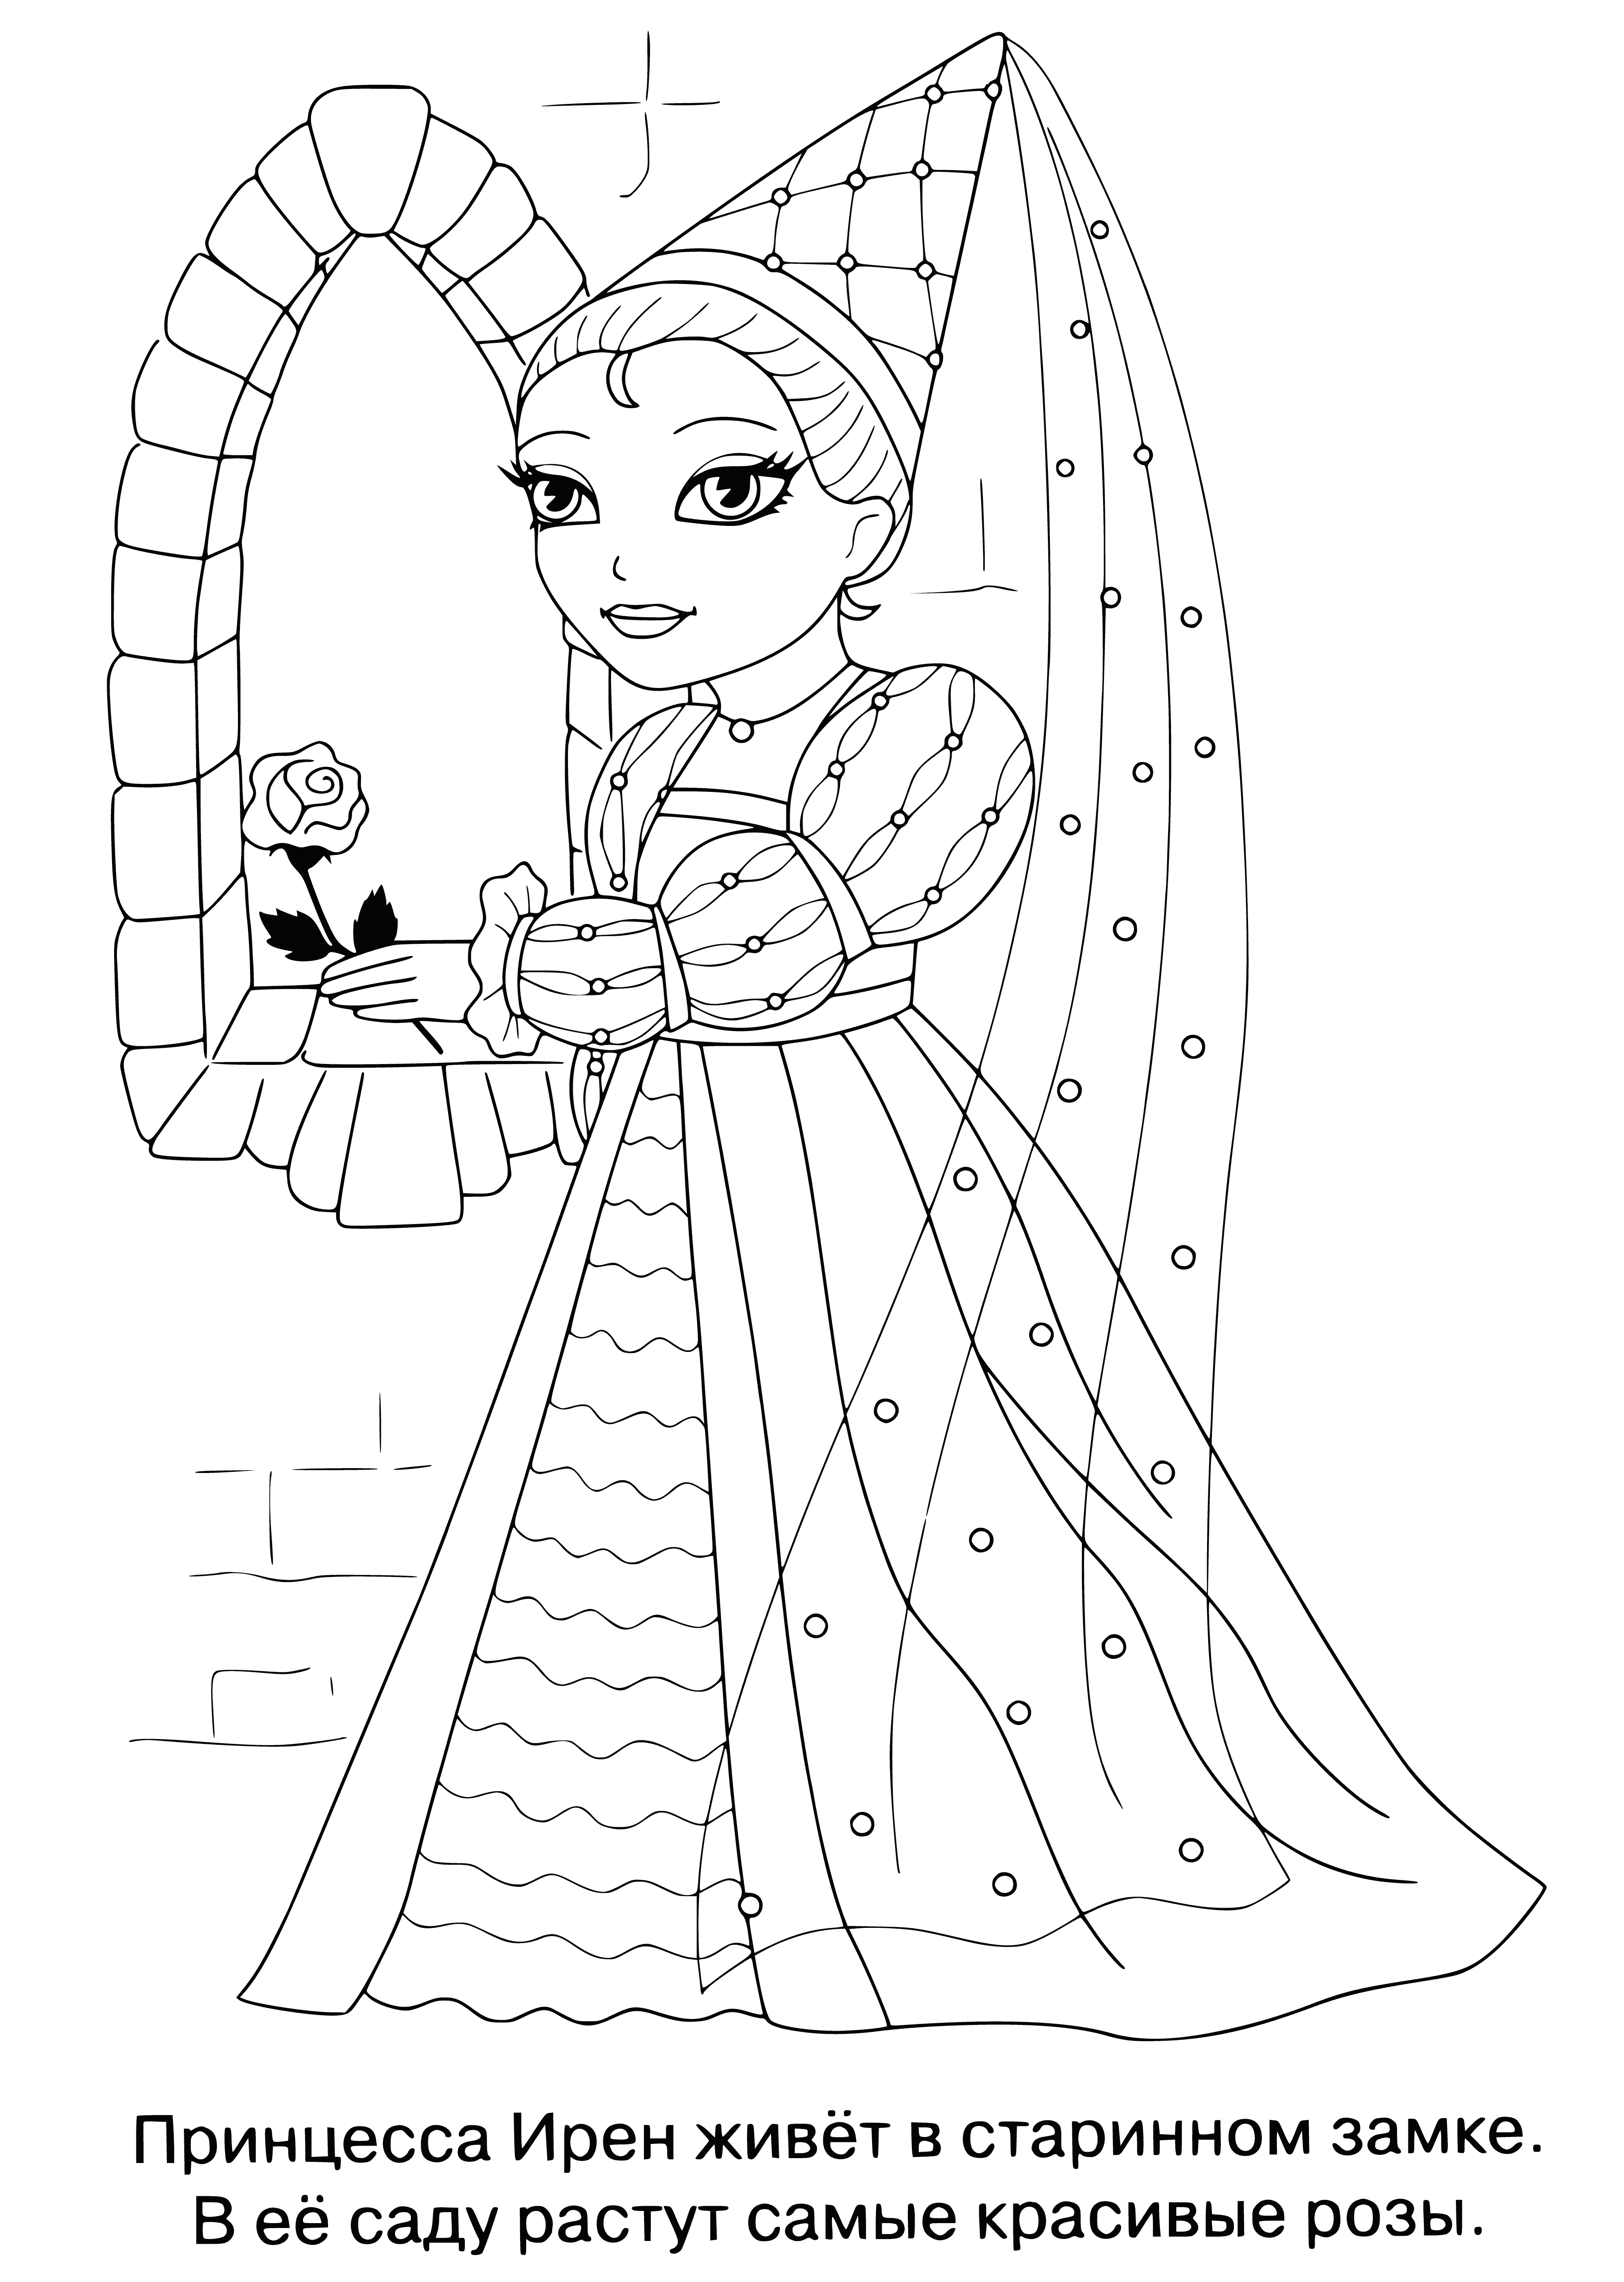 Princess Irene coloring page